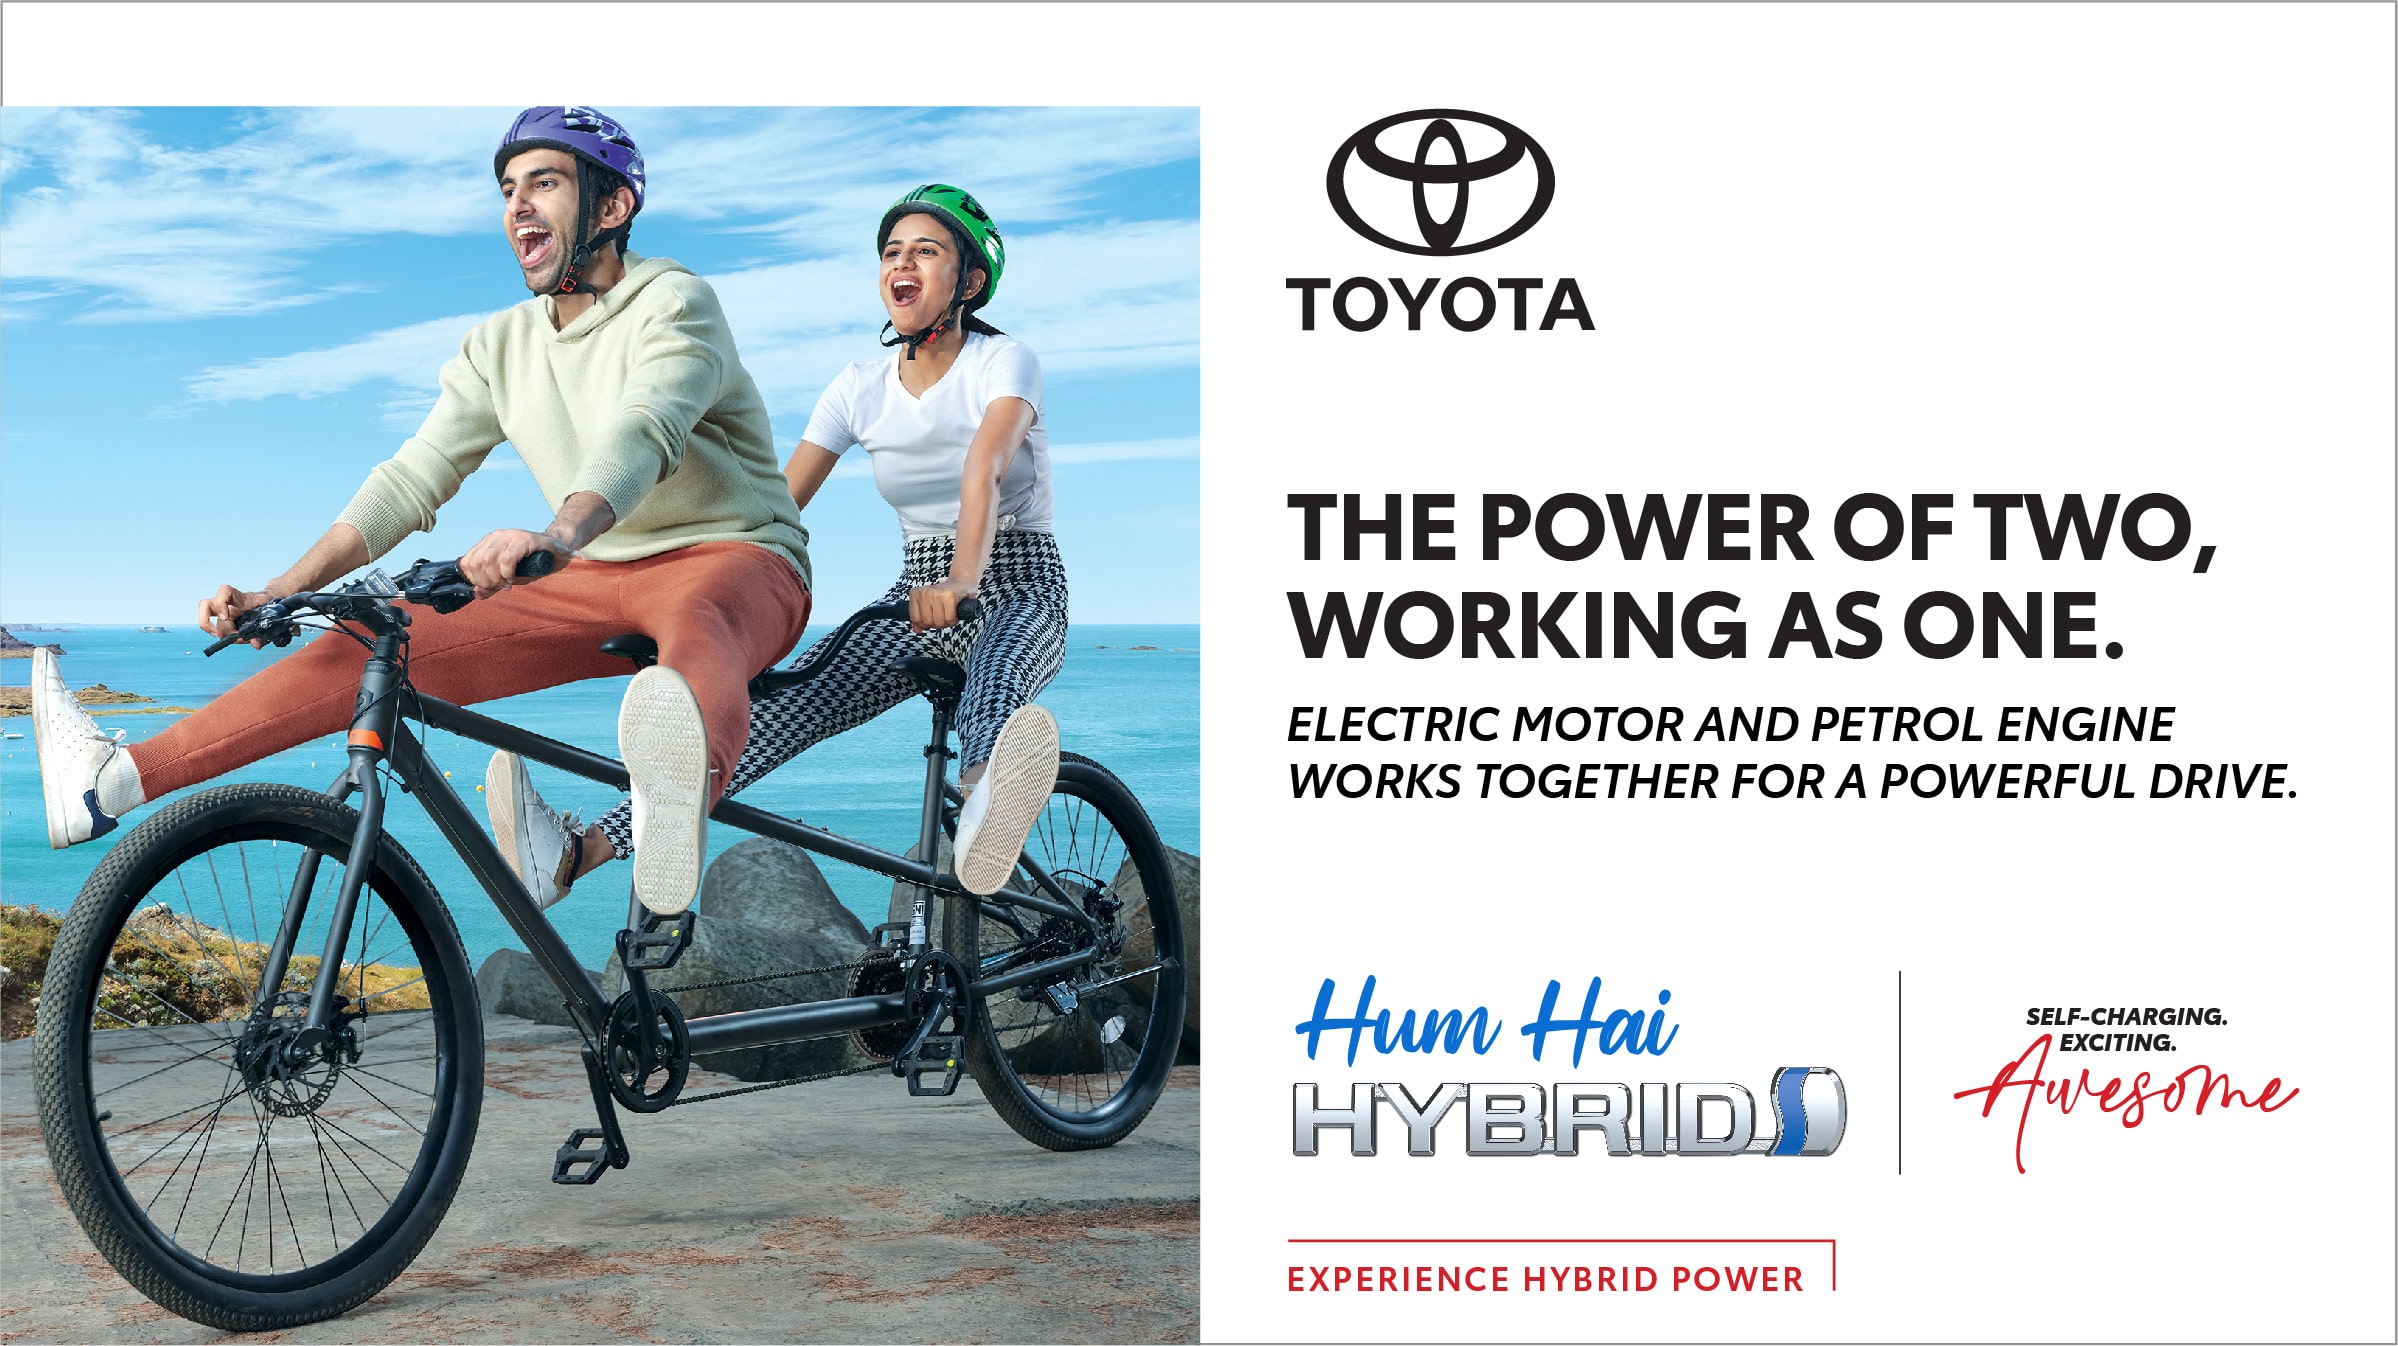 Toyota Kirloskar Motor Launches ‘Hum Hai Hybrid’ Campaign on Self-Charging Hybrid Electric Vehicle Technology